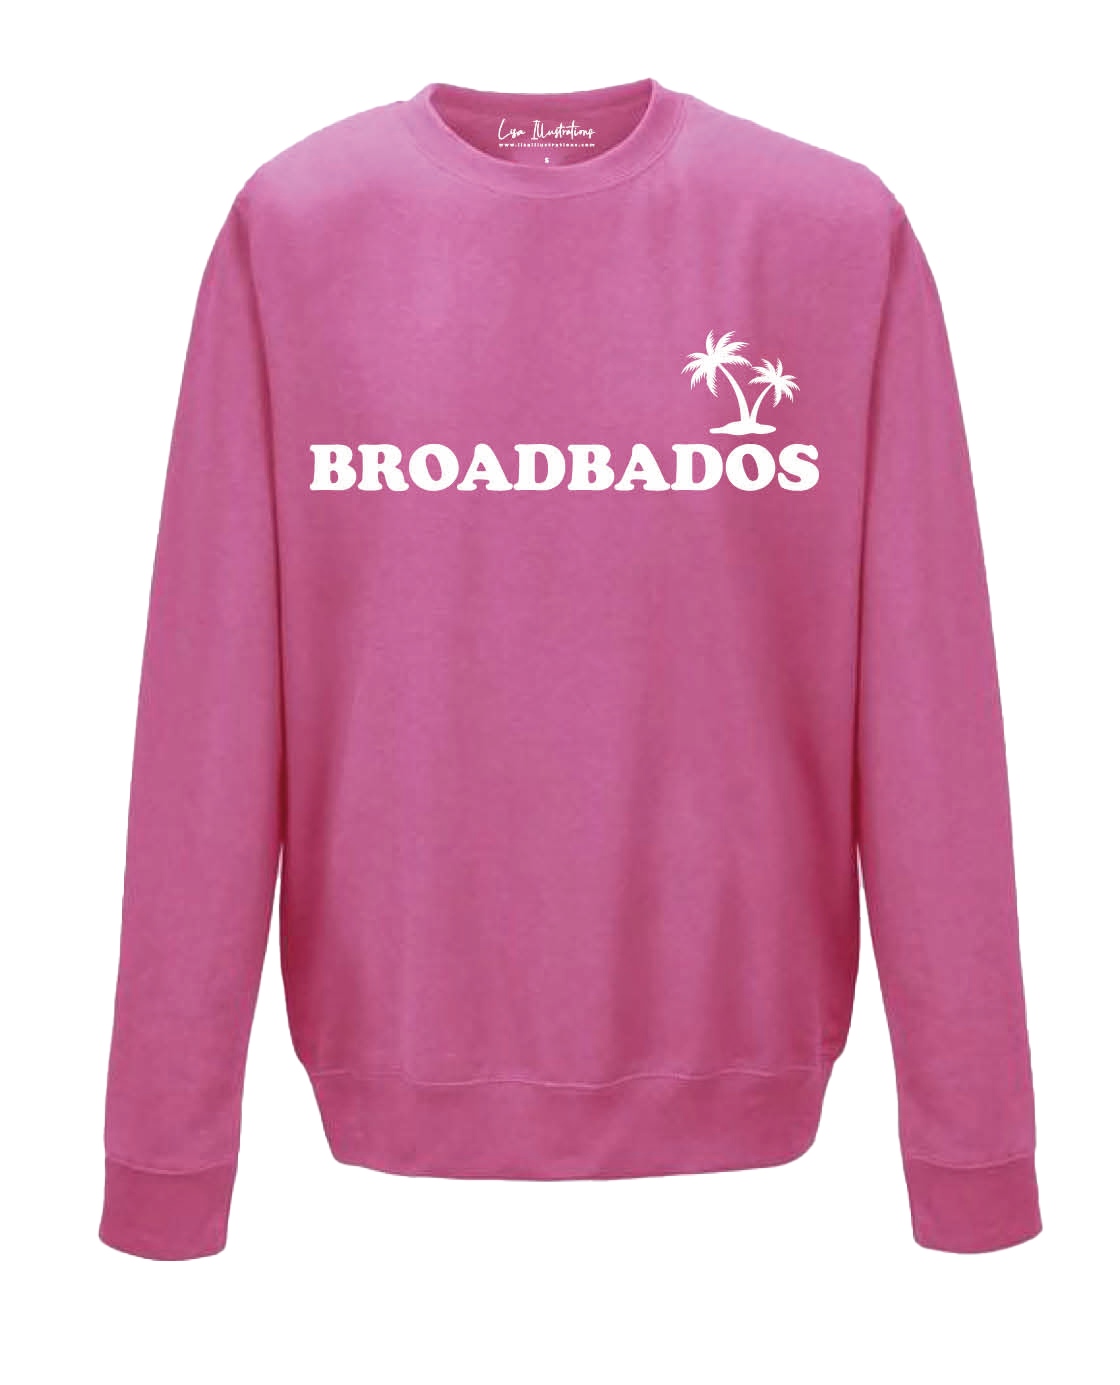 ‘Broadbados’ Adult Unisex Sweatshirt - Pink